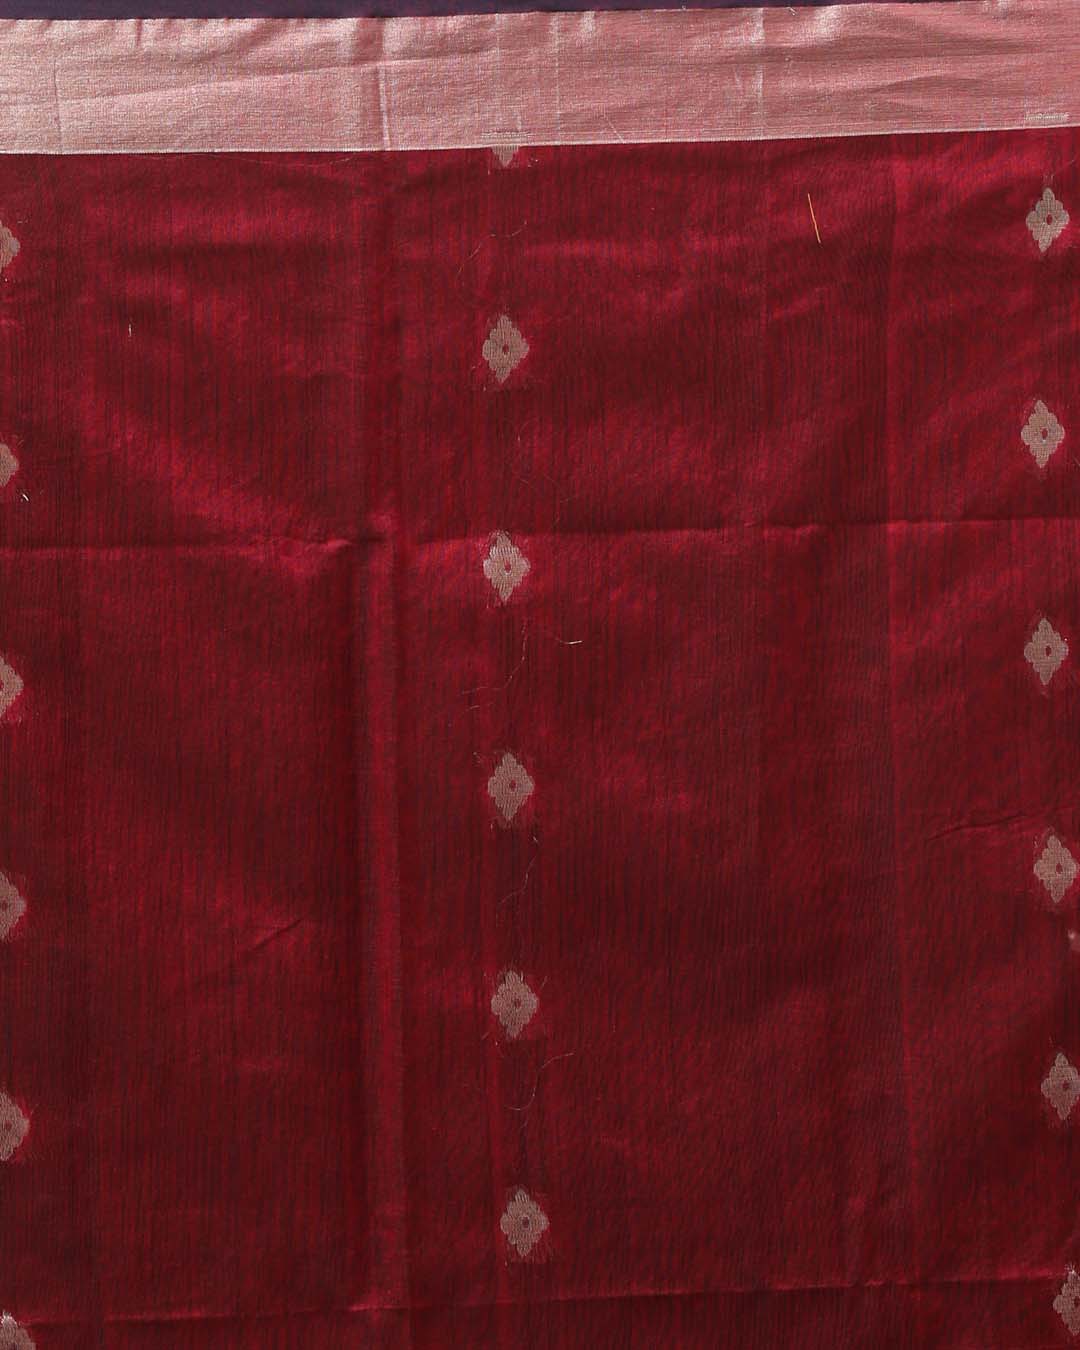 Jamdani Magenta Woven Design Traditional Wear